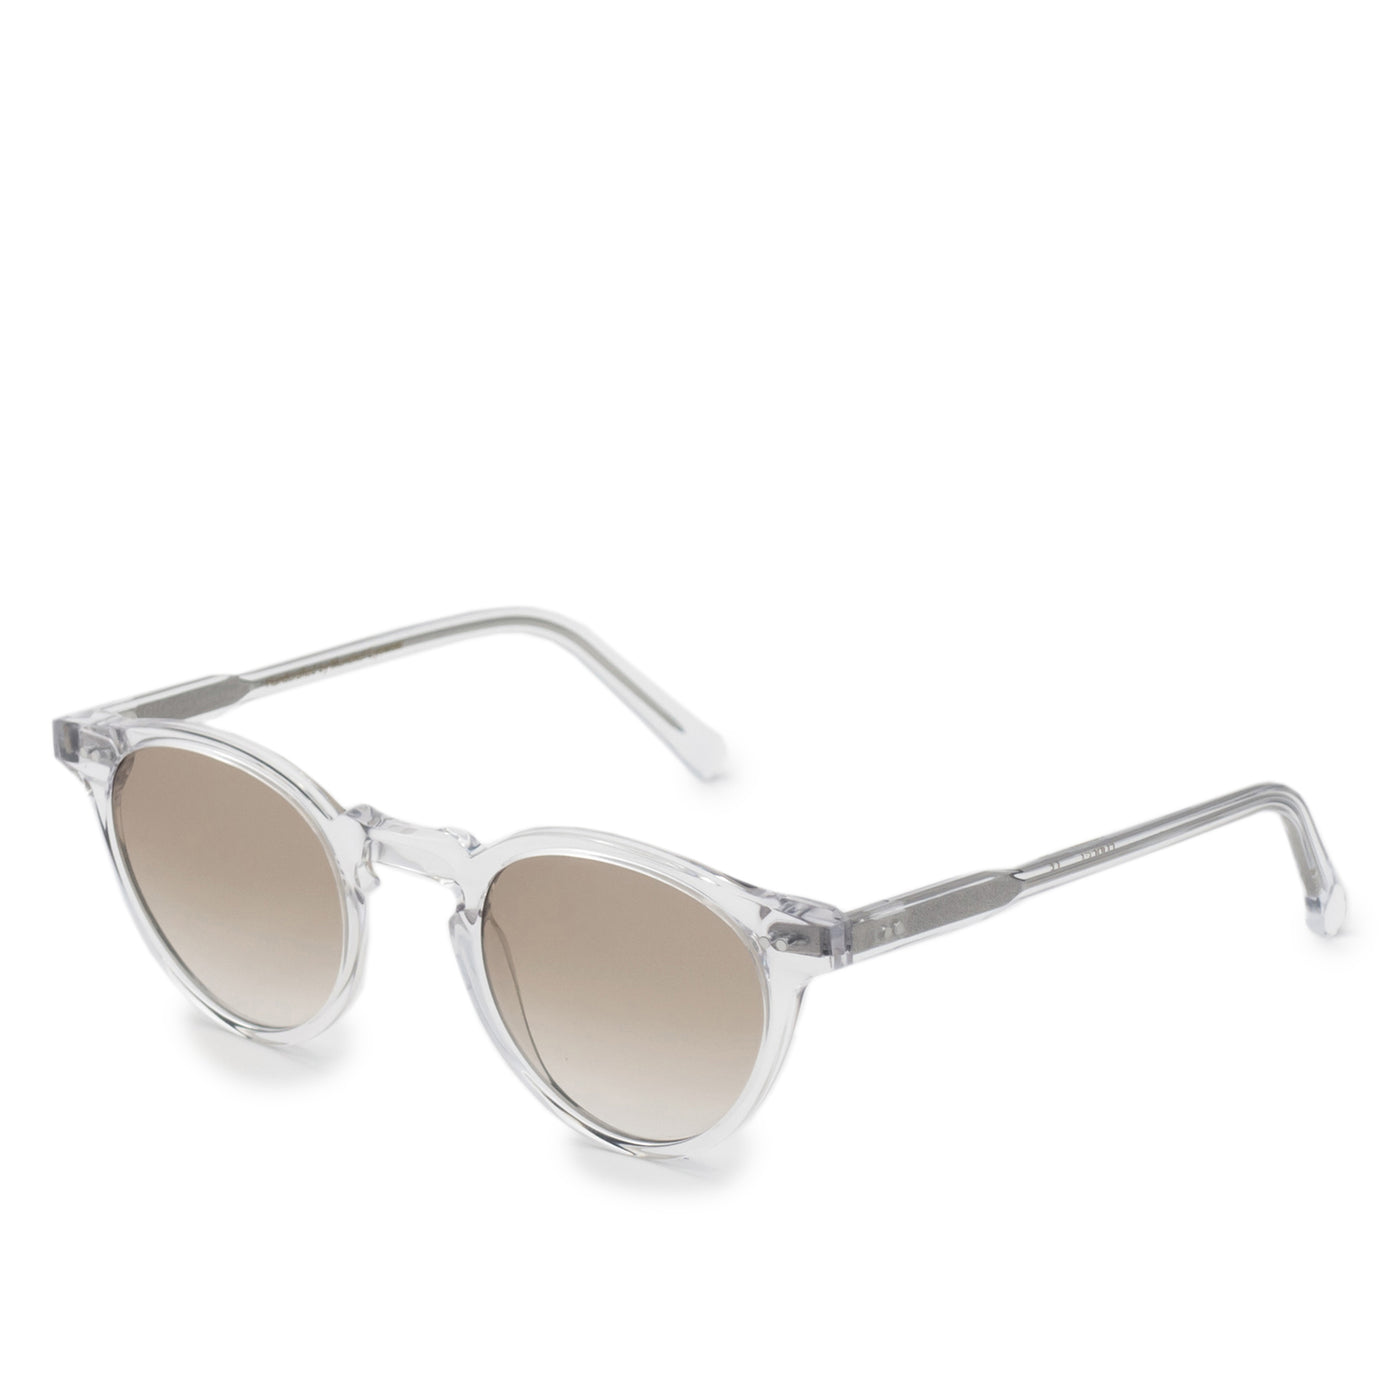 Monokel Forest Crystal Sunglasses Gradient Brown Solid Lens side